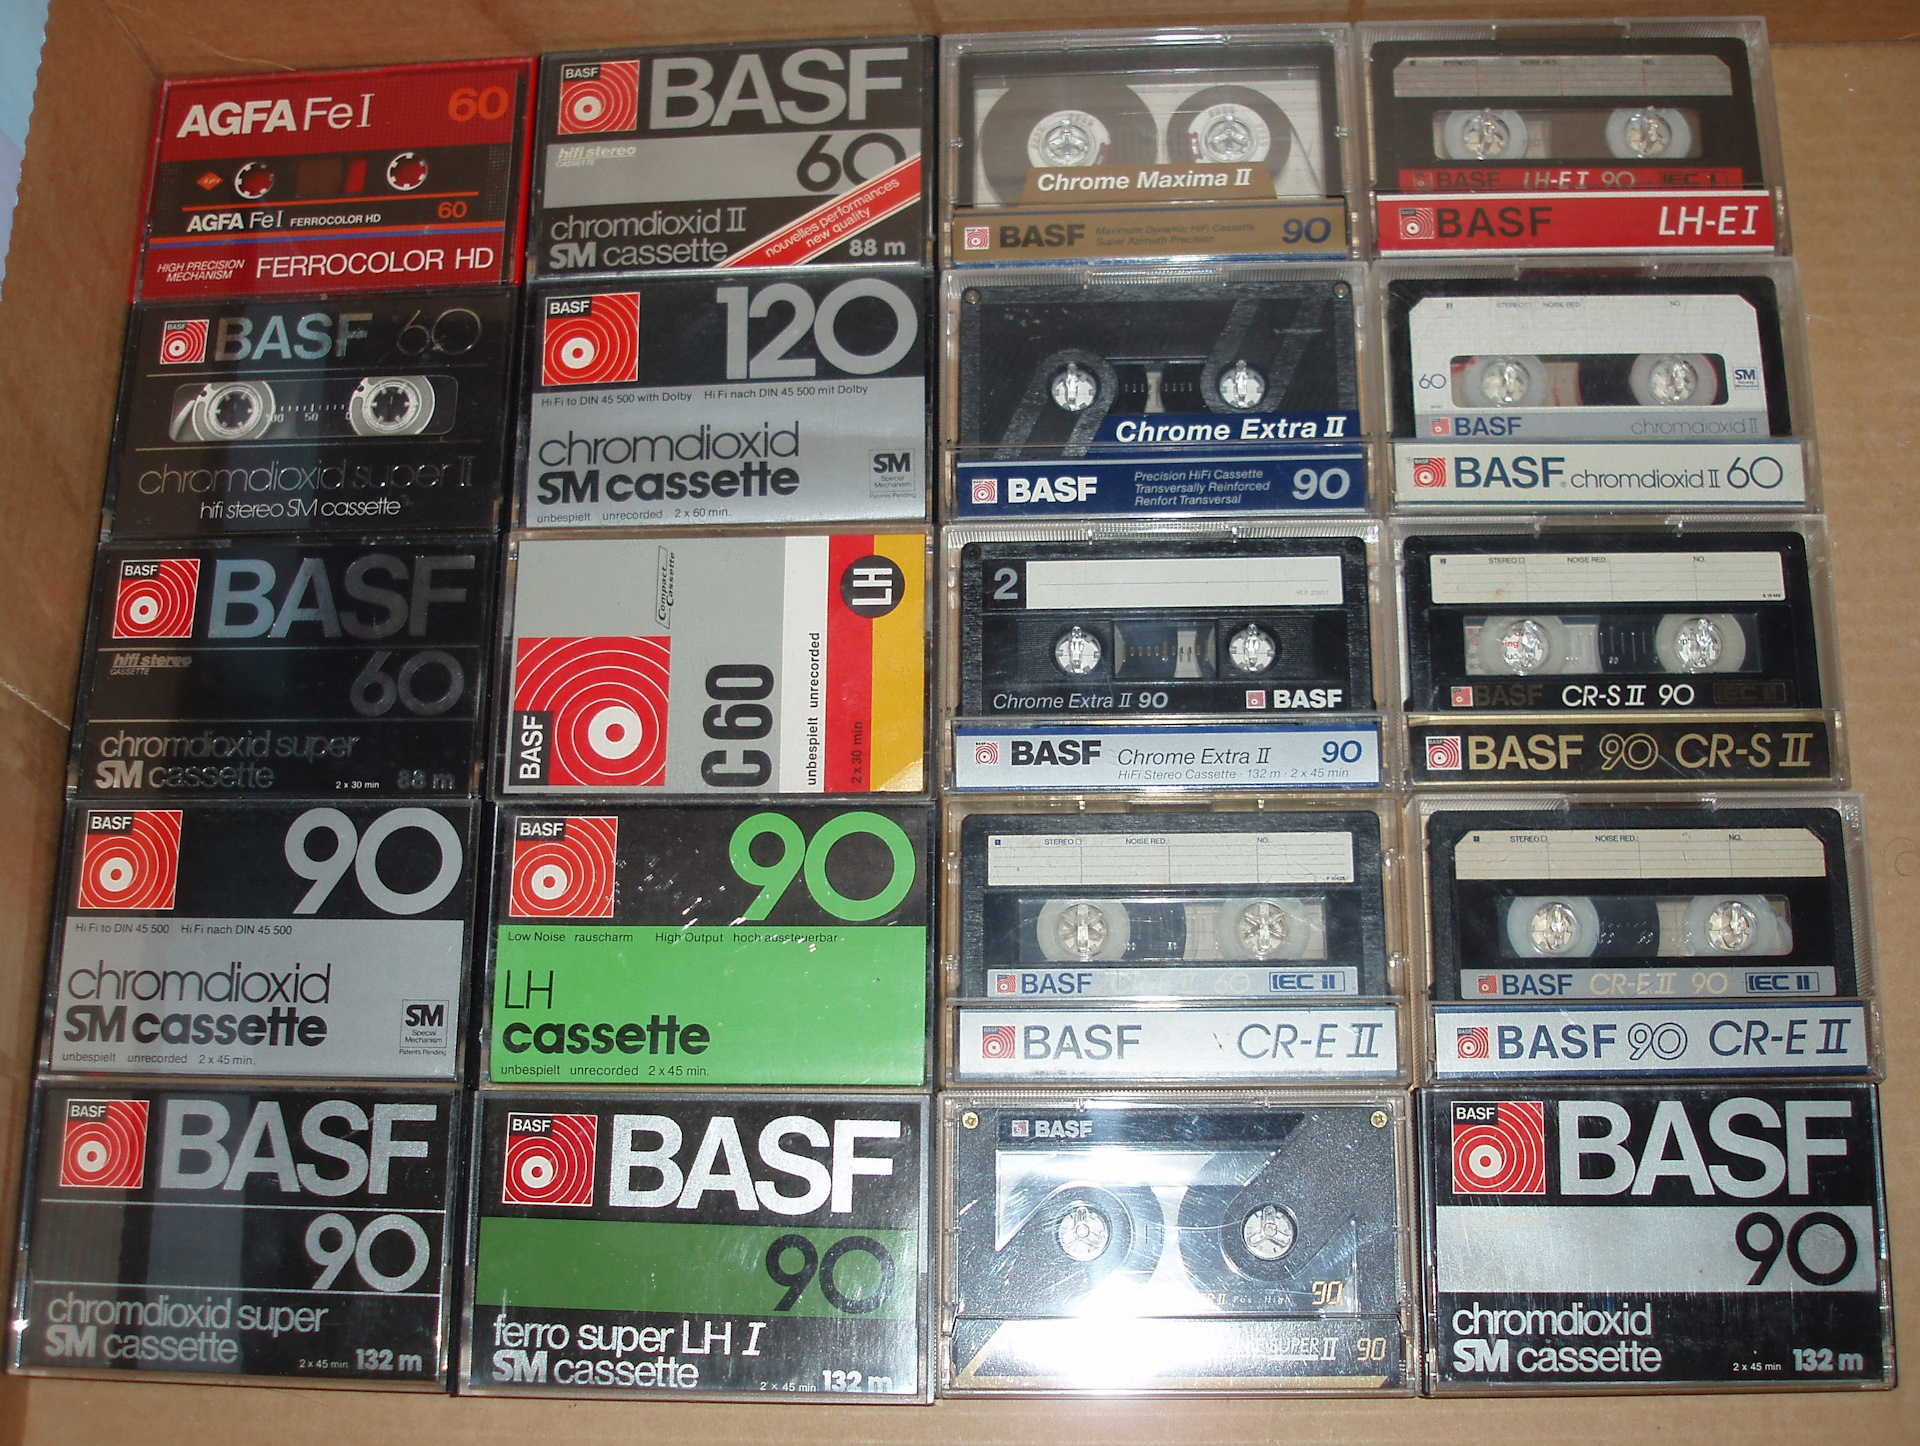 Каталог аудиокассет. Старые кассеты BASF cho2. BASF maxima Edition II аудиокассеты. Аудиокассета Agfa. Вкладыш аудиокассета BASF.